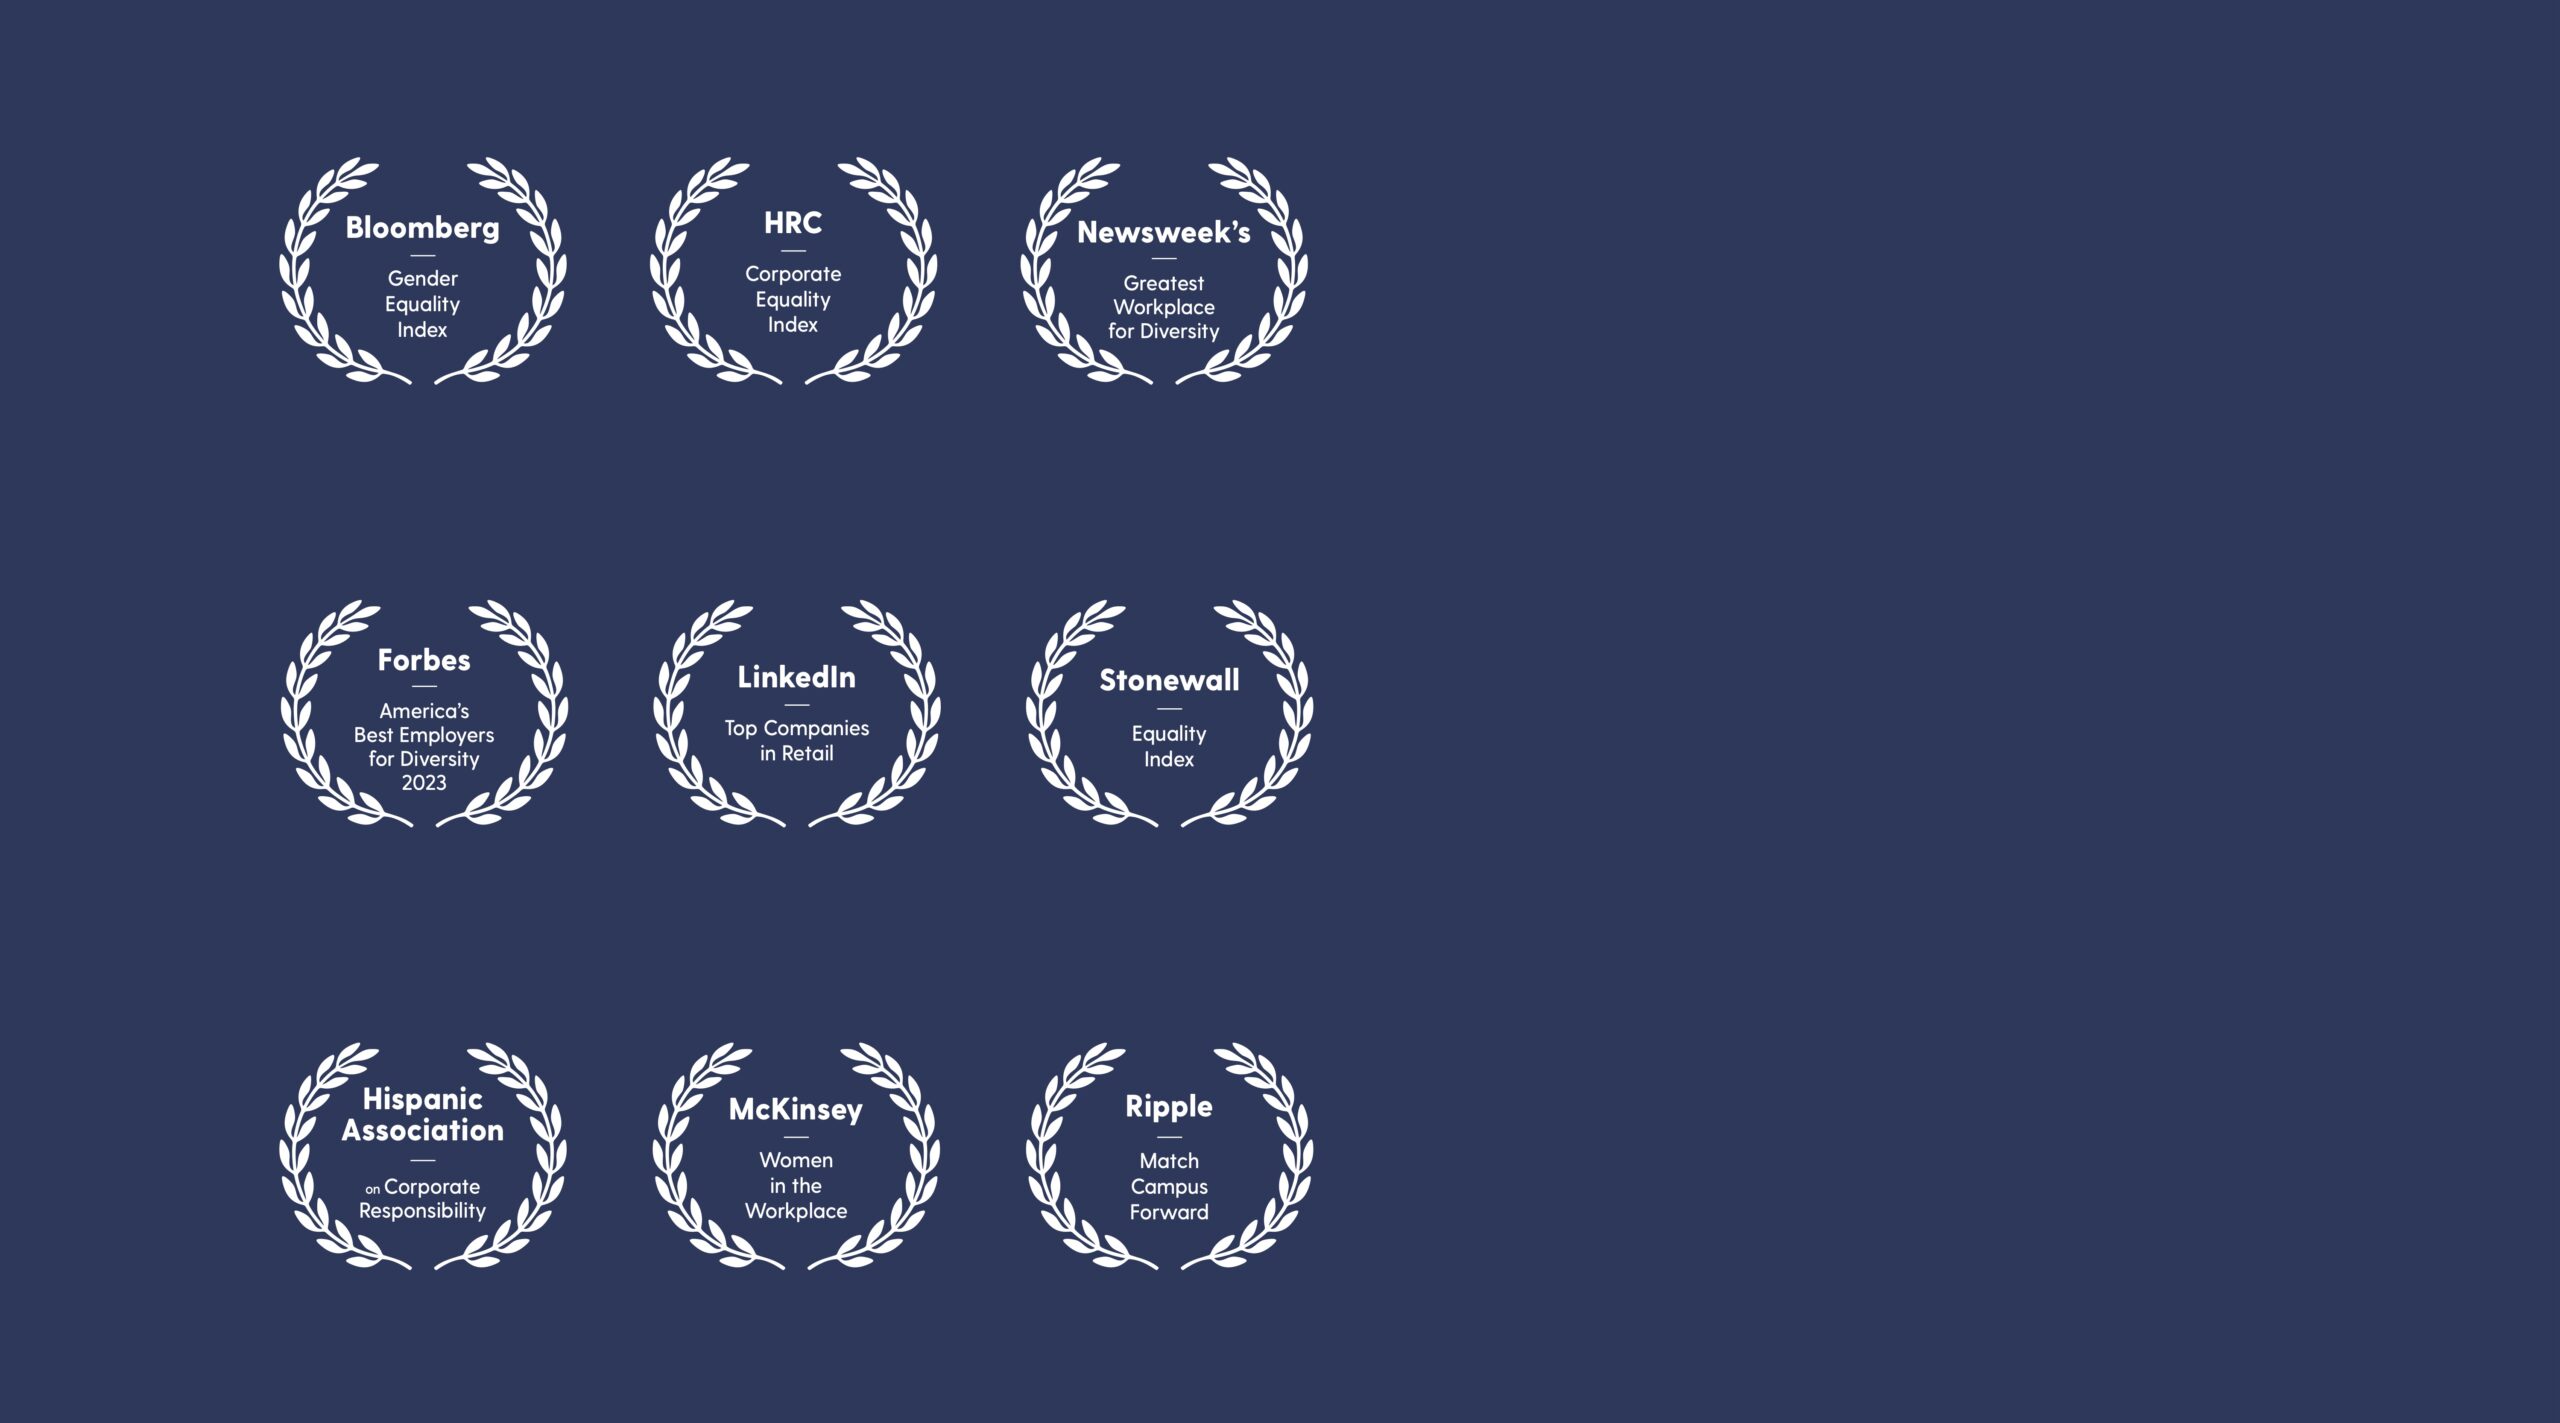 Nine awards logos